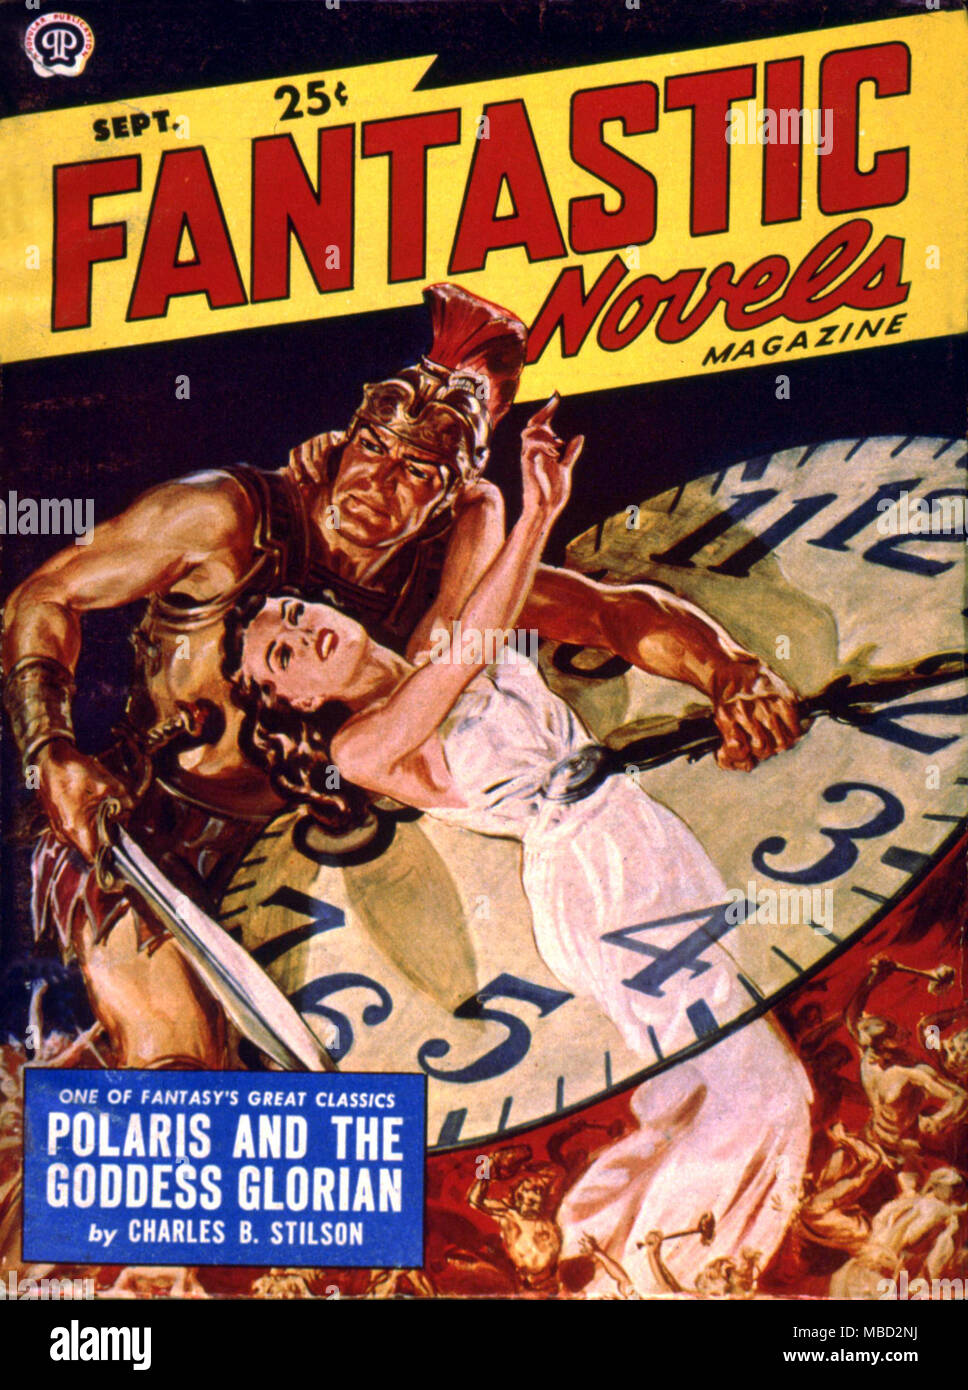 Science Fiction & Horror Magazine. Cover of Fantastic Novels, September 1950. Artwork by Saunders Stock Photo